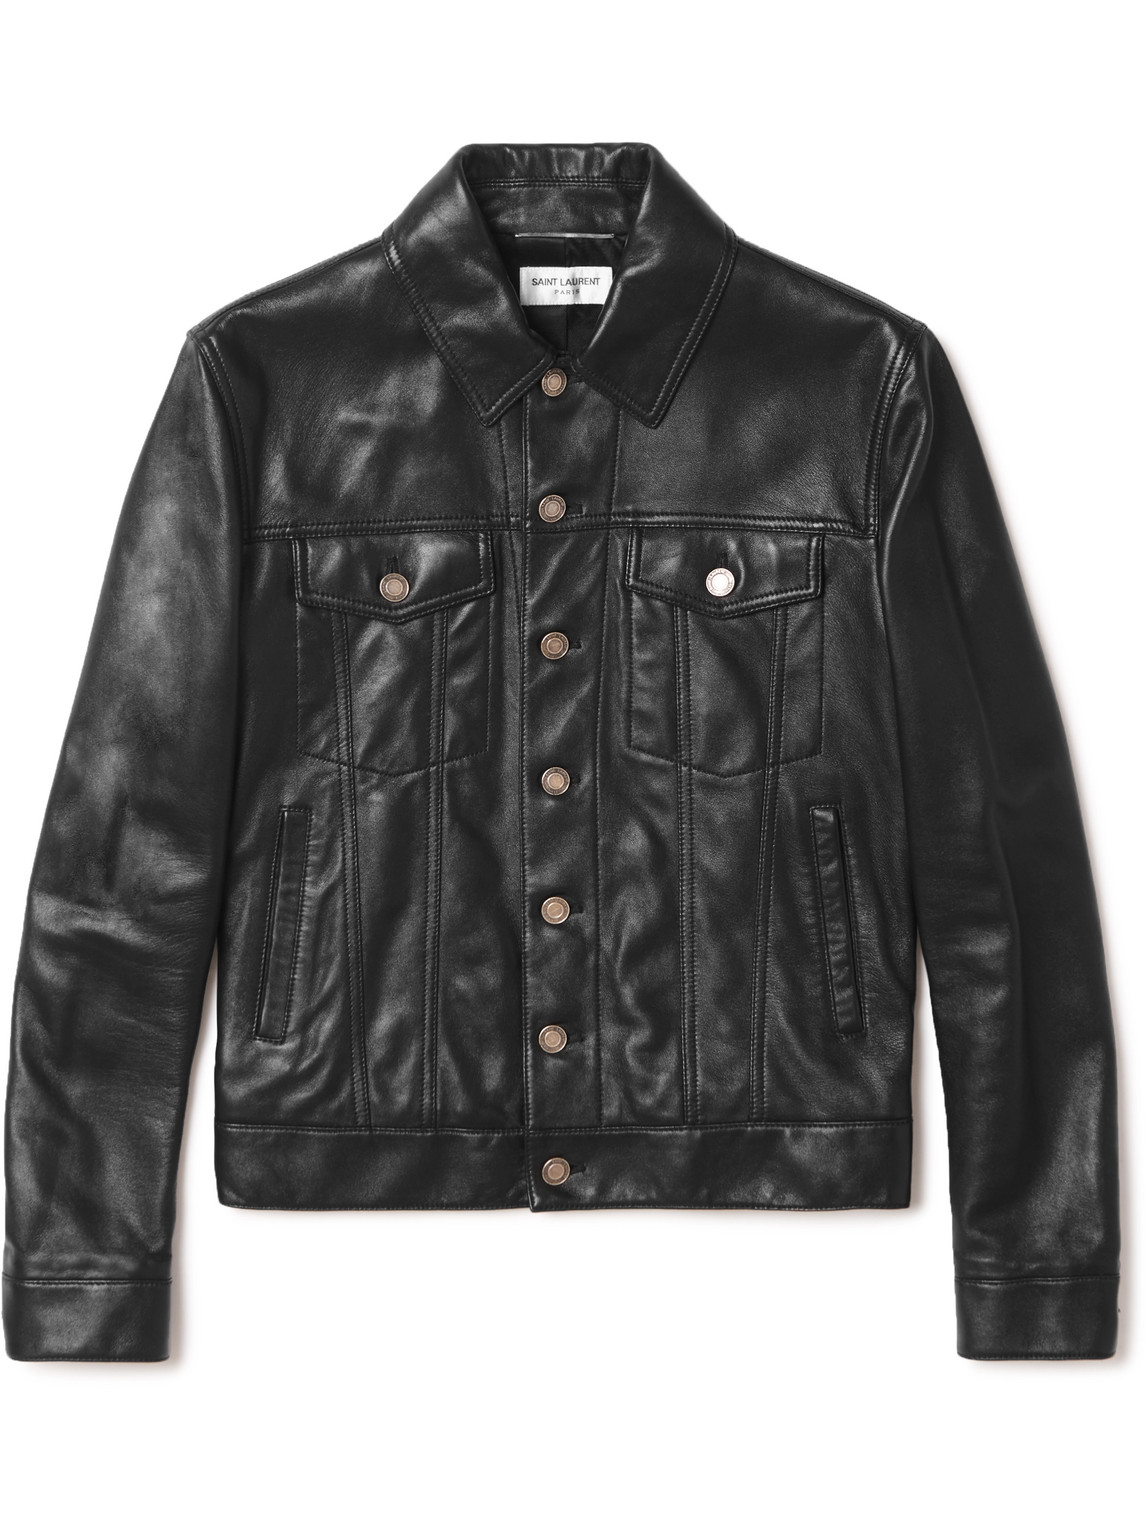 Saint Laurent Black Leather Vintage Effect Jacket